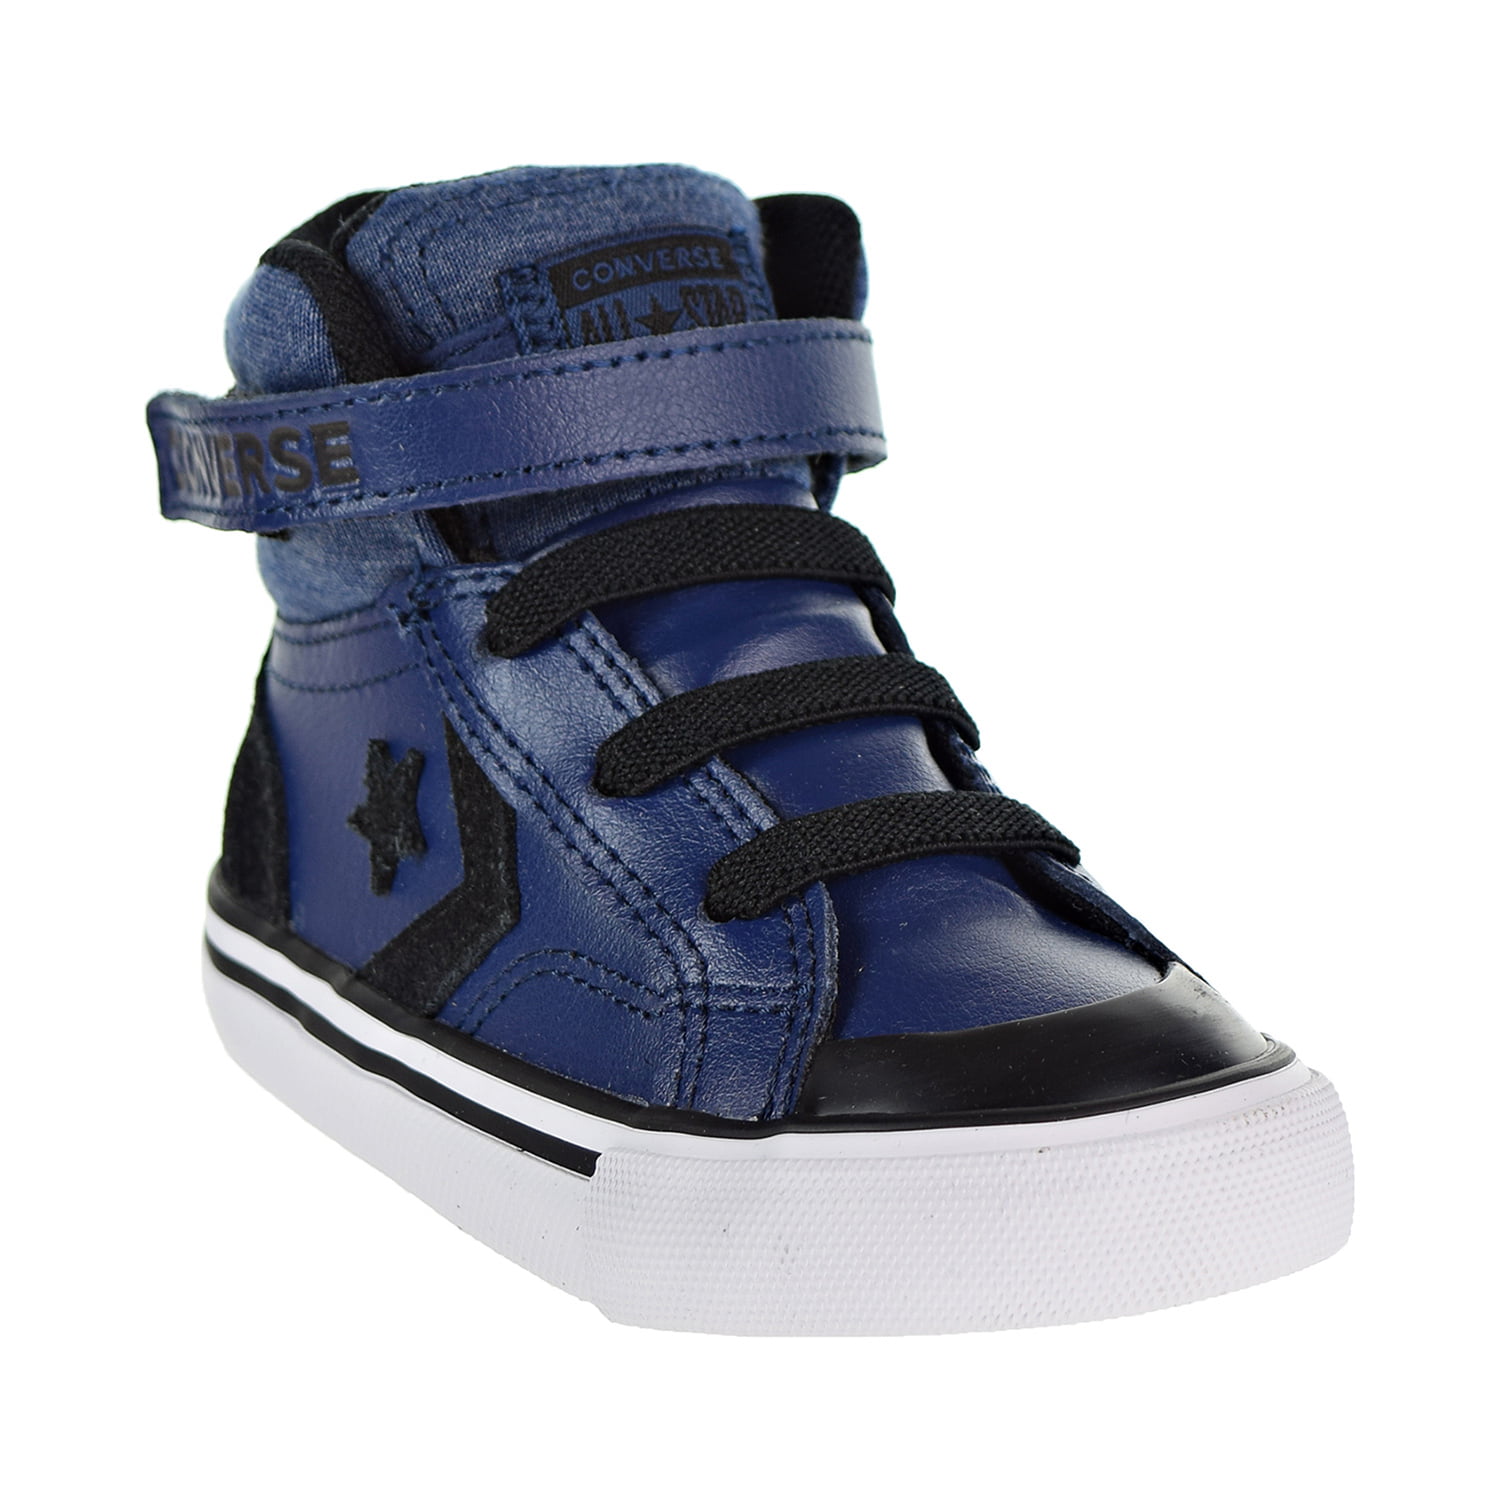 Converse Pro Blaze Strap HI Toddlers Shoes Navy/Black/White 762011c | Sneaker high